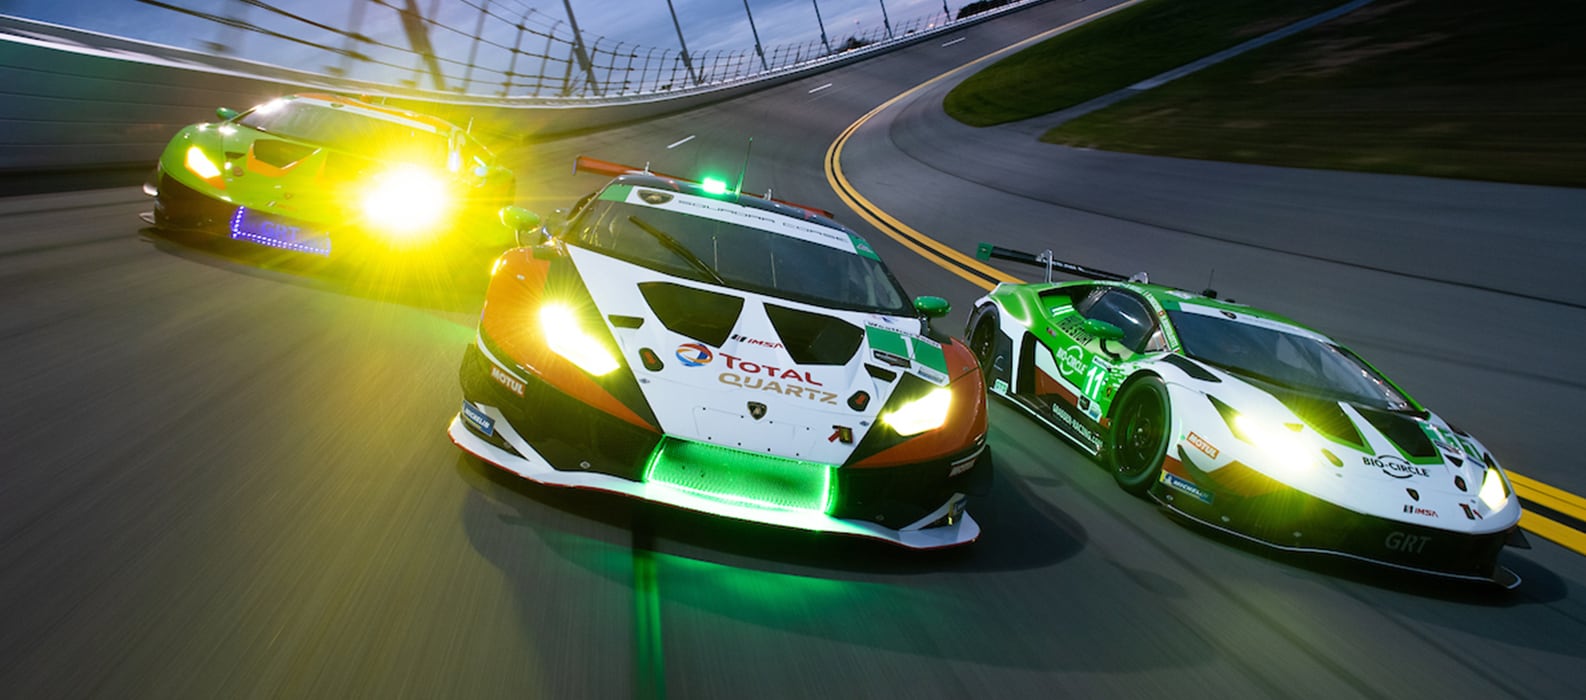 Lamborghini trio ready to fight at the Daytona 24 Hours